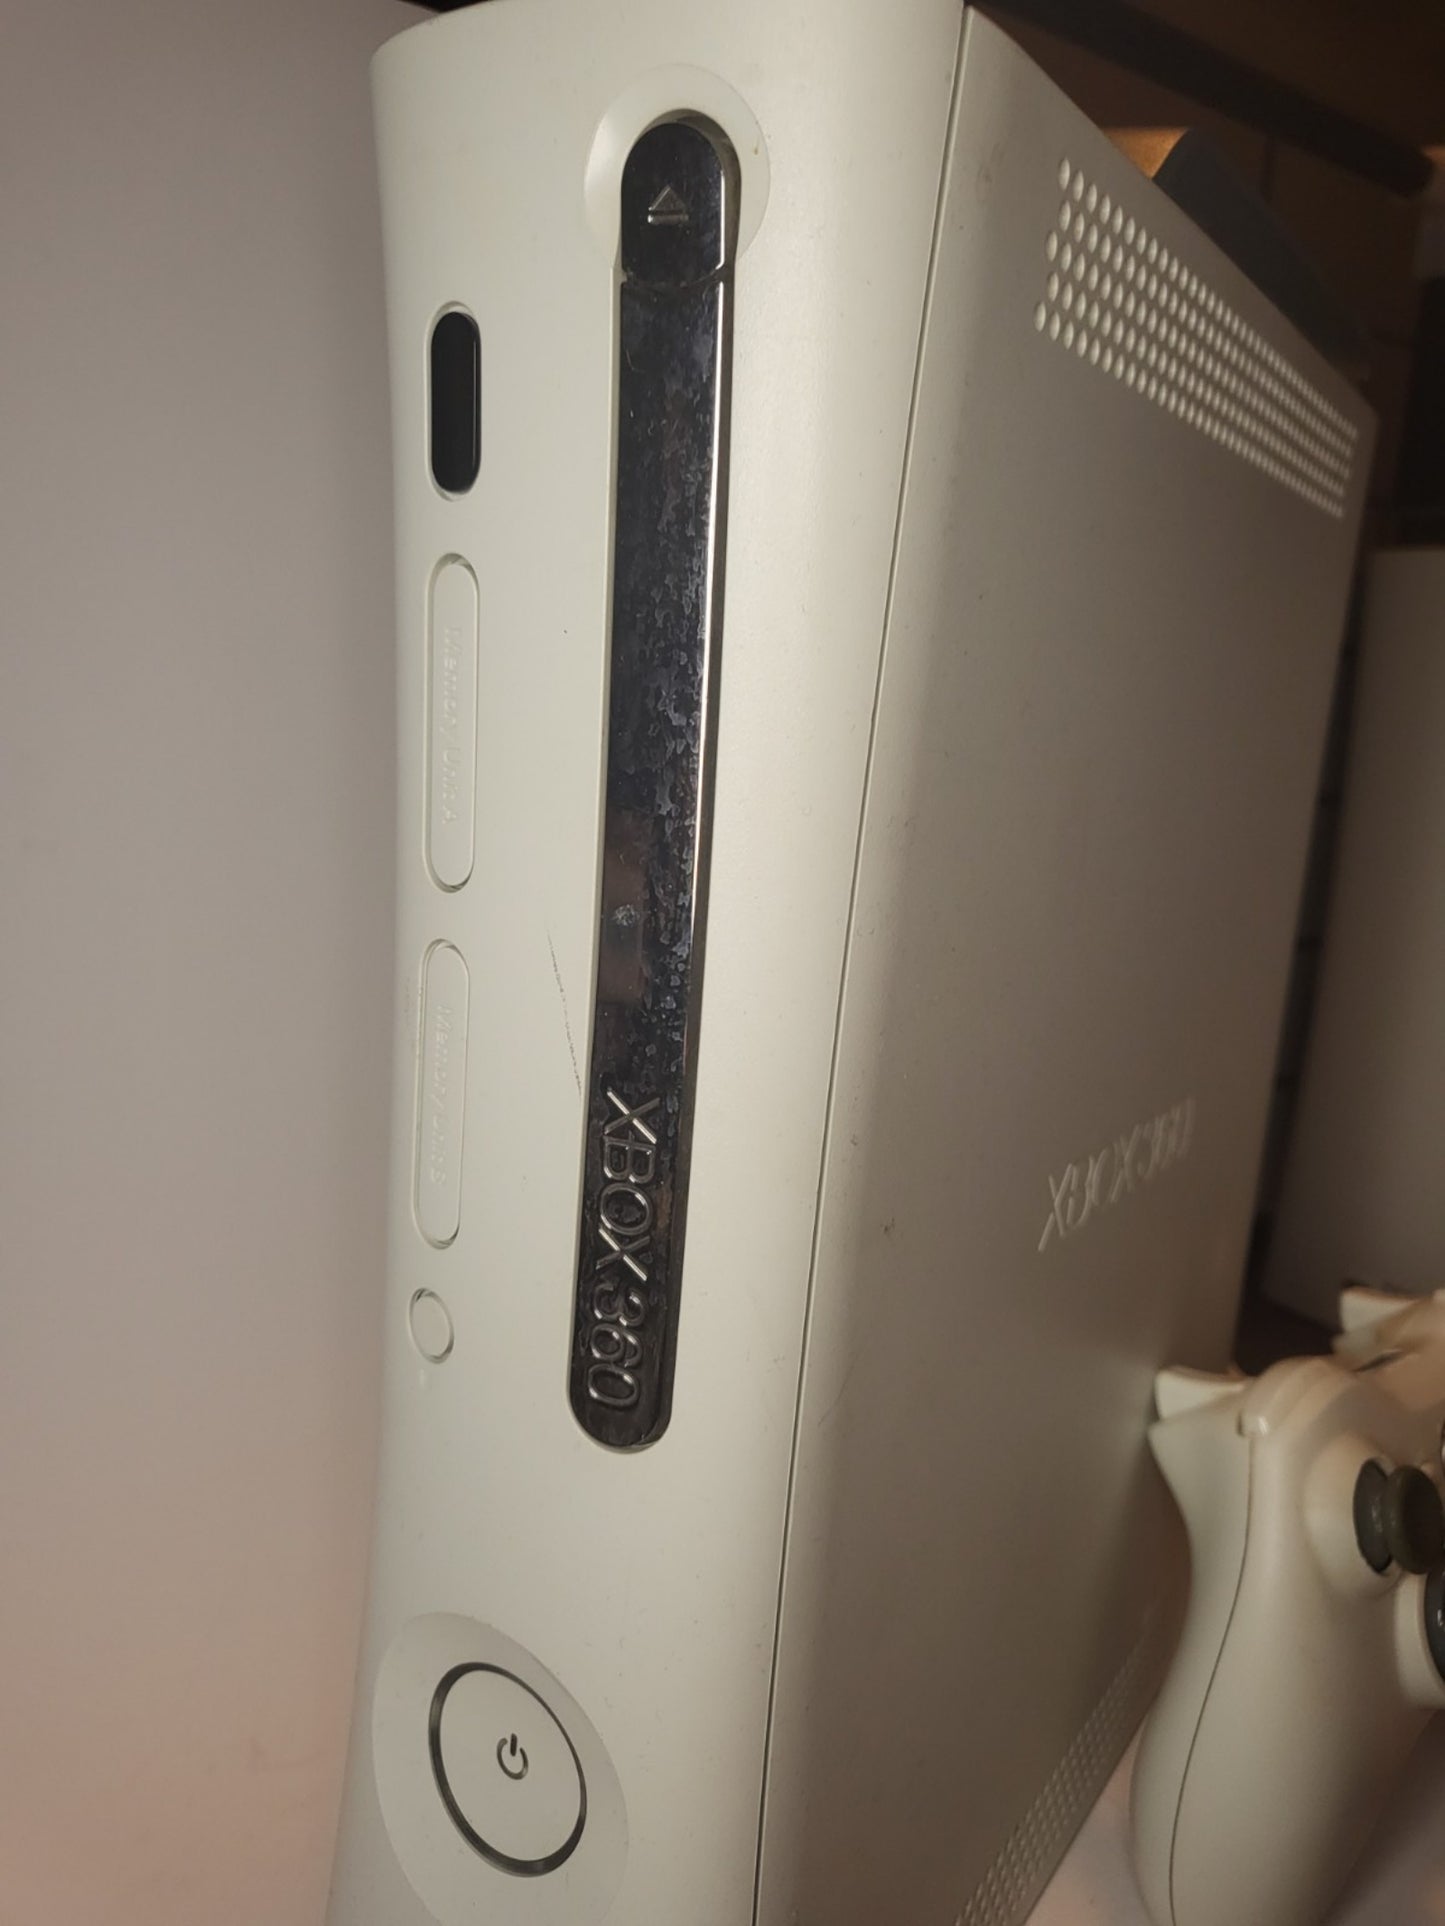 Witte Xbox 360 (120gb) met 1 controller en alle kabels